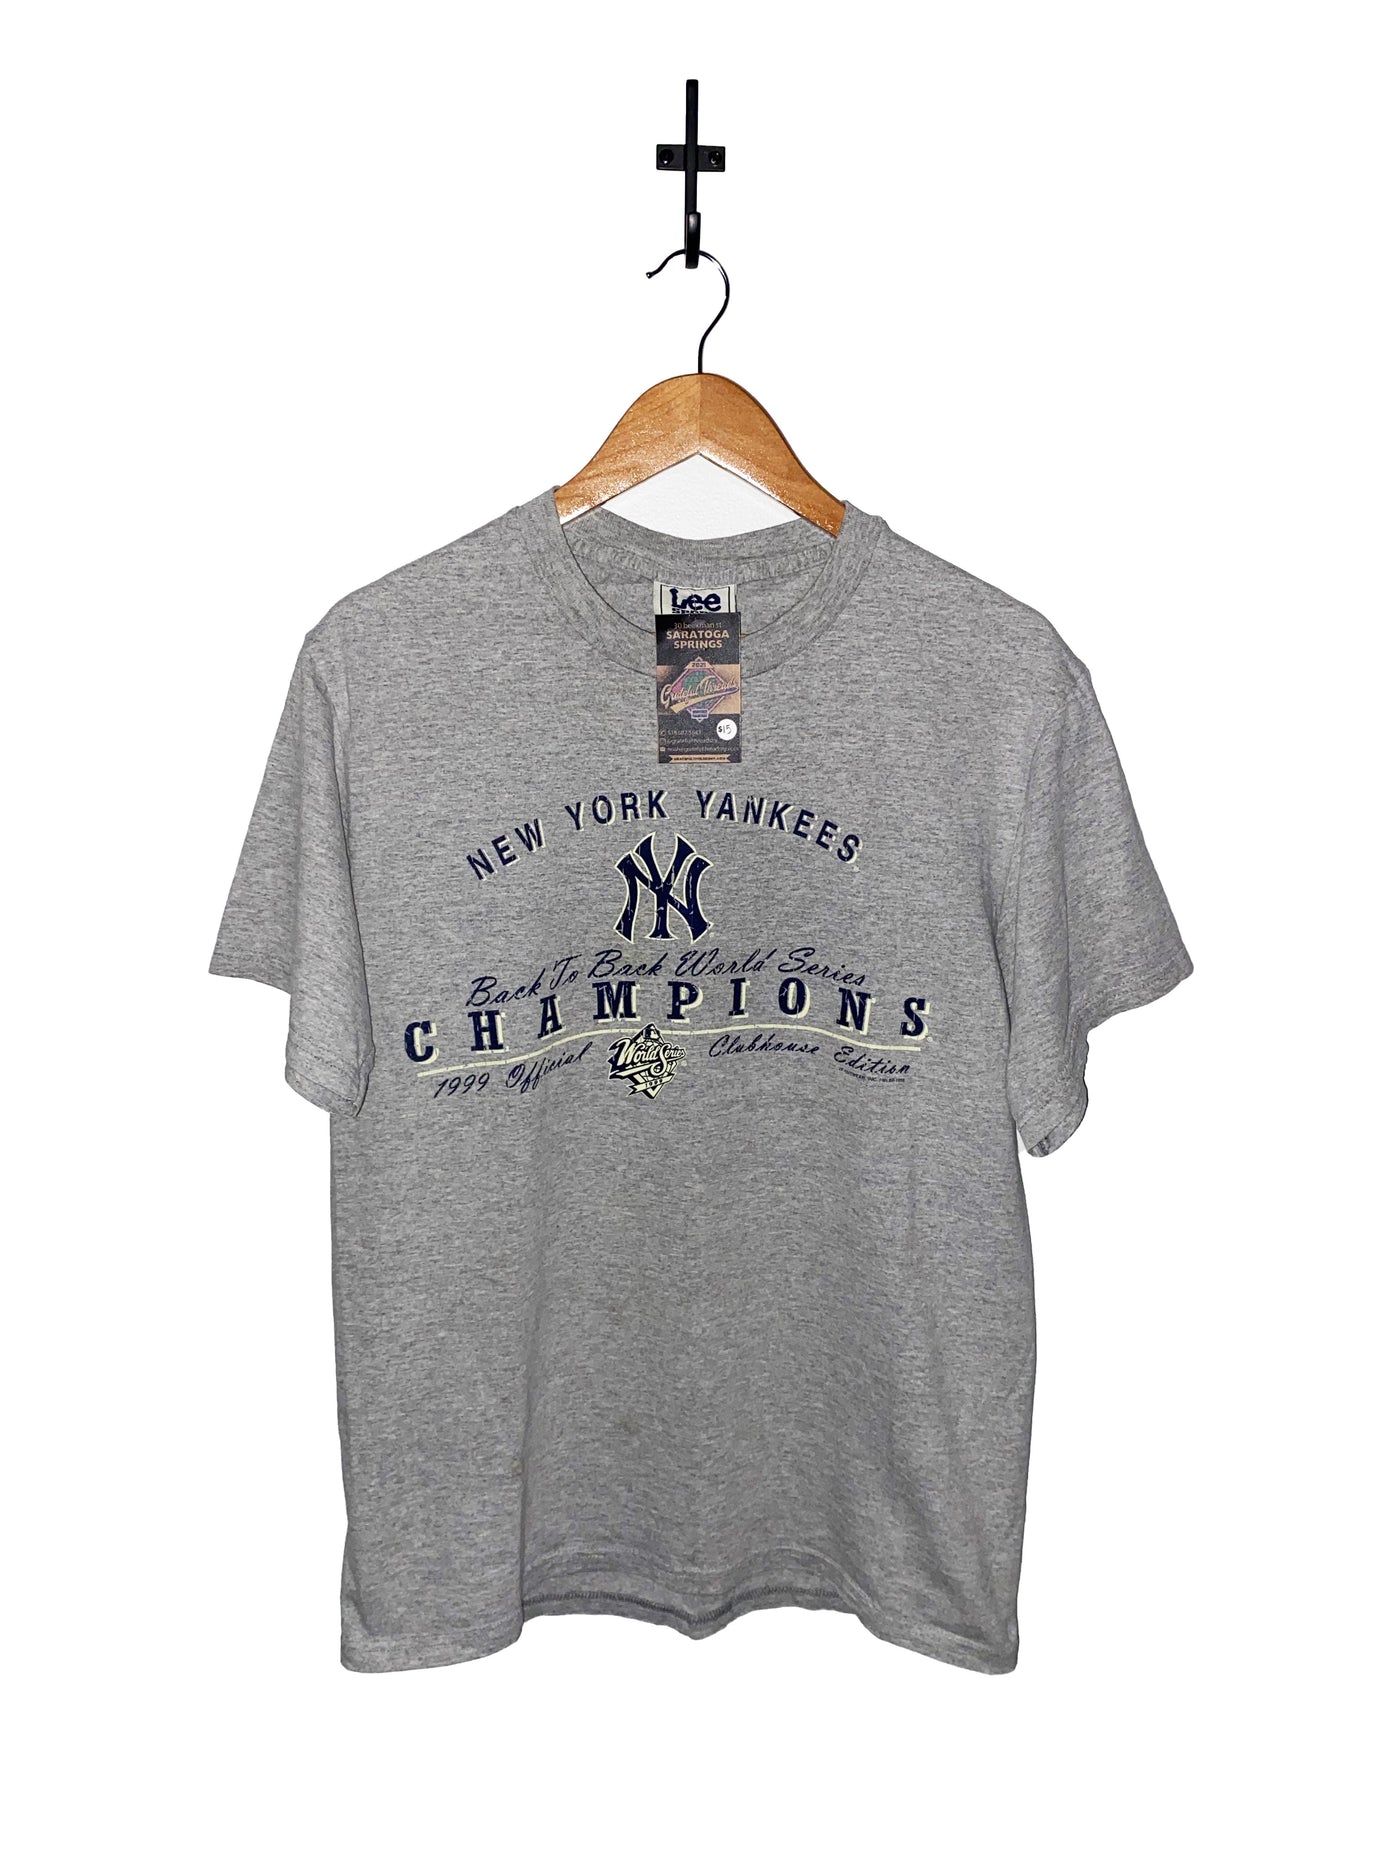 Vintage 1999 Yankees World series Champs T-Shirt